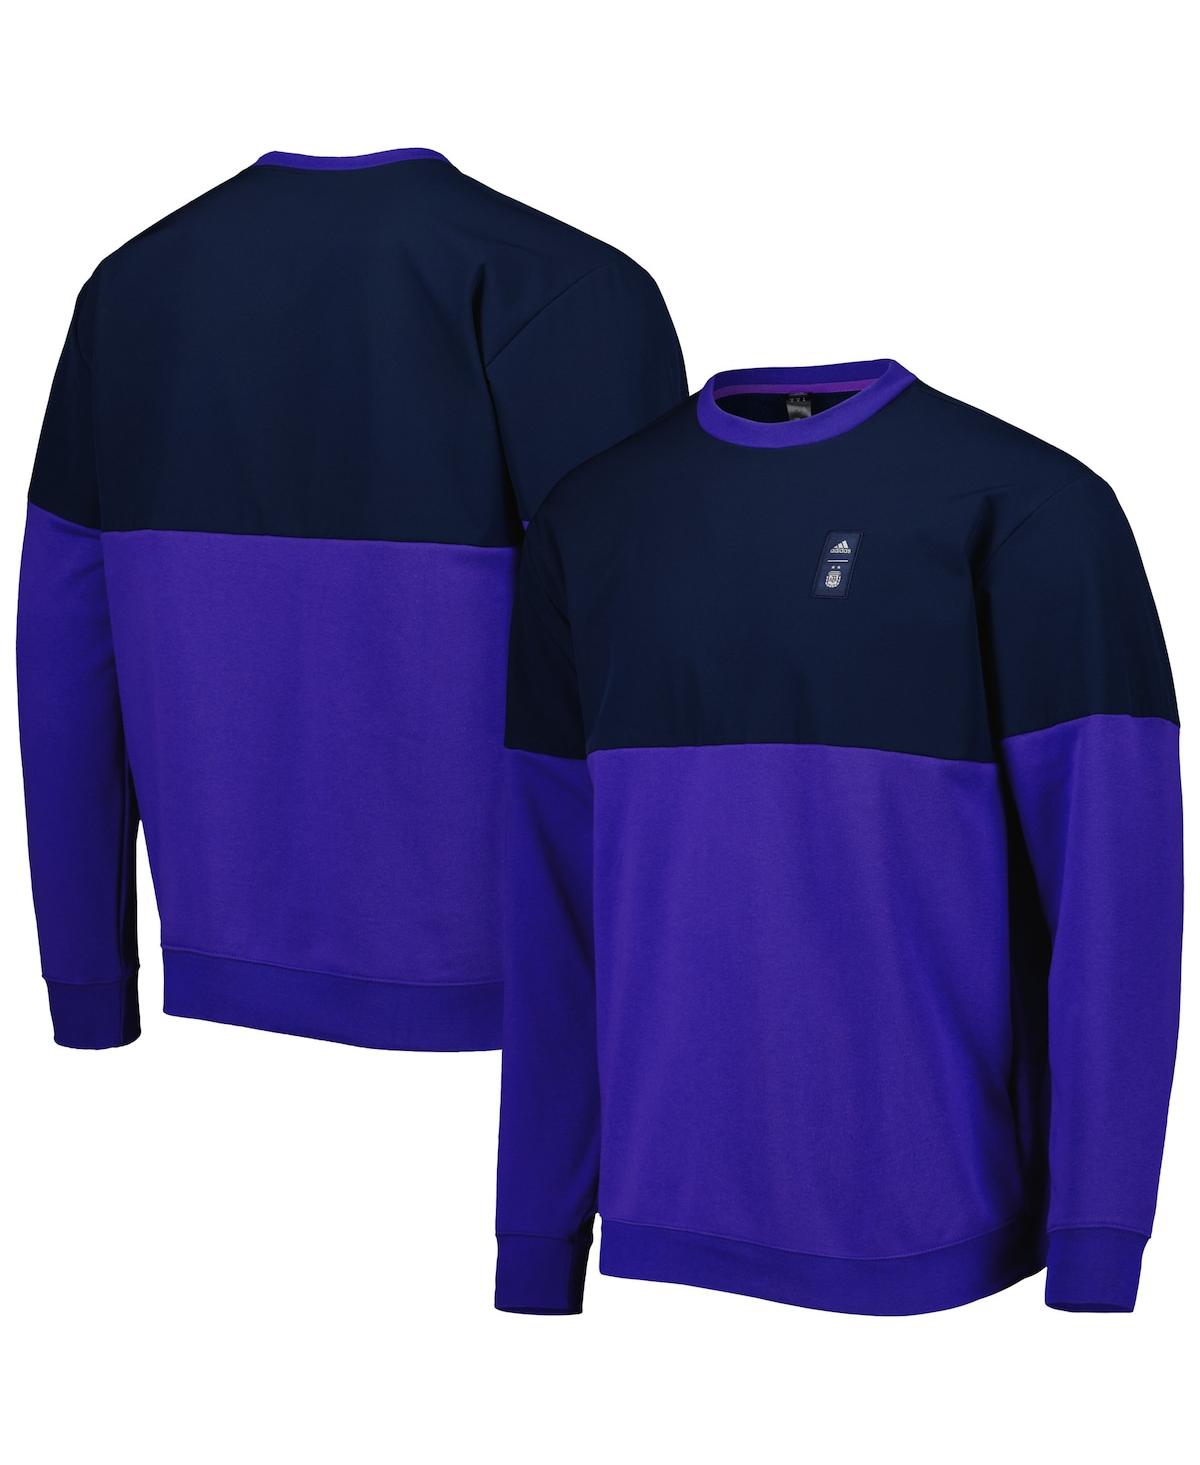 Adidas Originals Men's Adidas Navy And Purple Argentina National Team Graphic Pullover Sweatshirt In Navy,purple